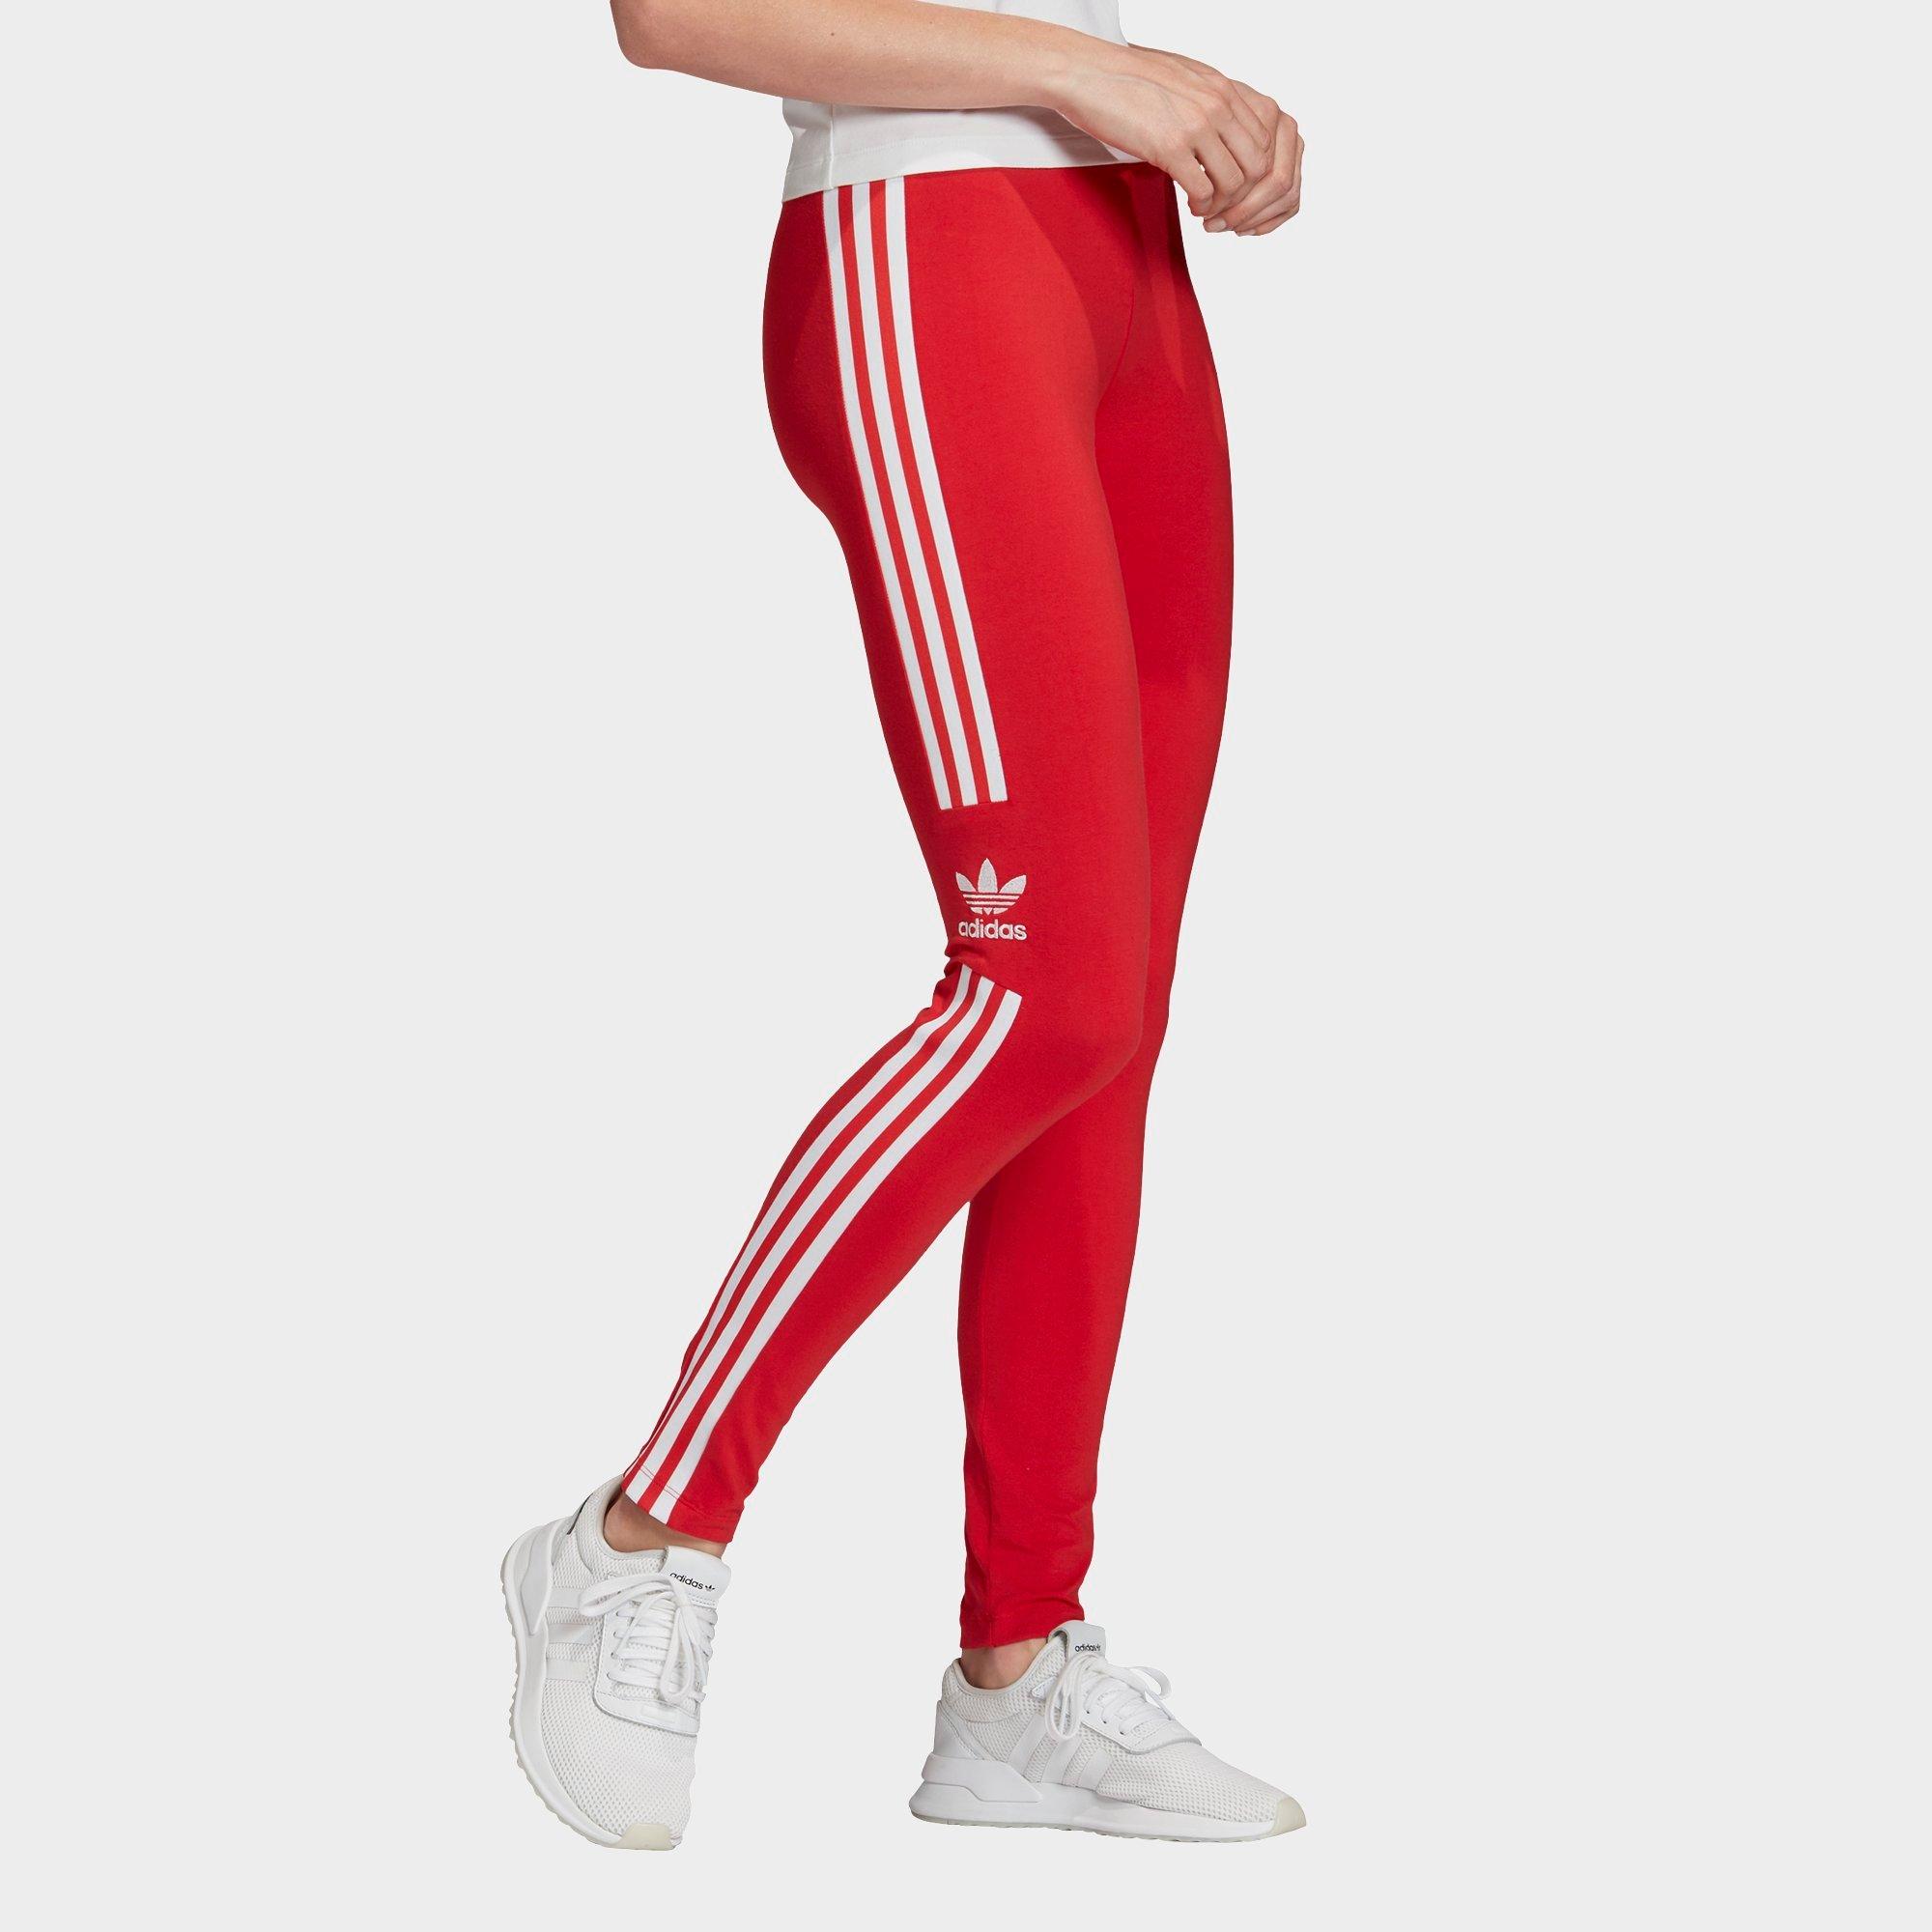 womens adidas leggings jd sports